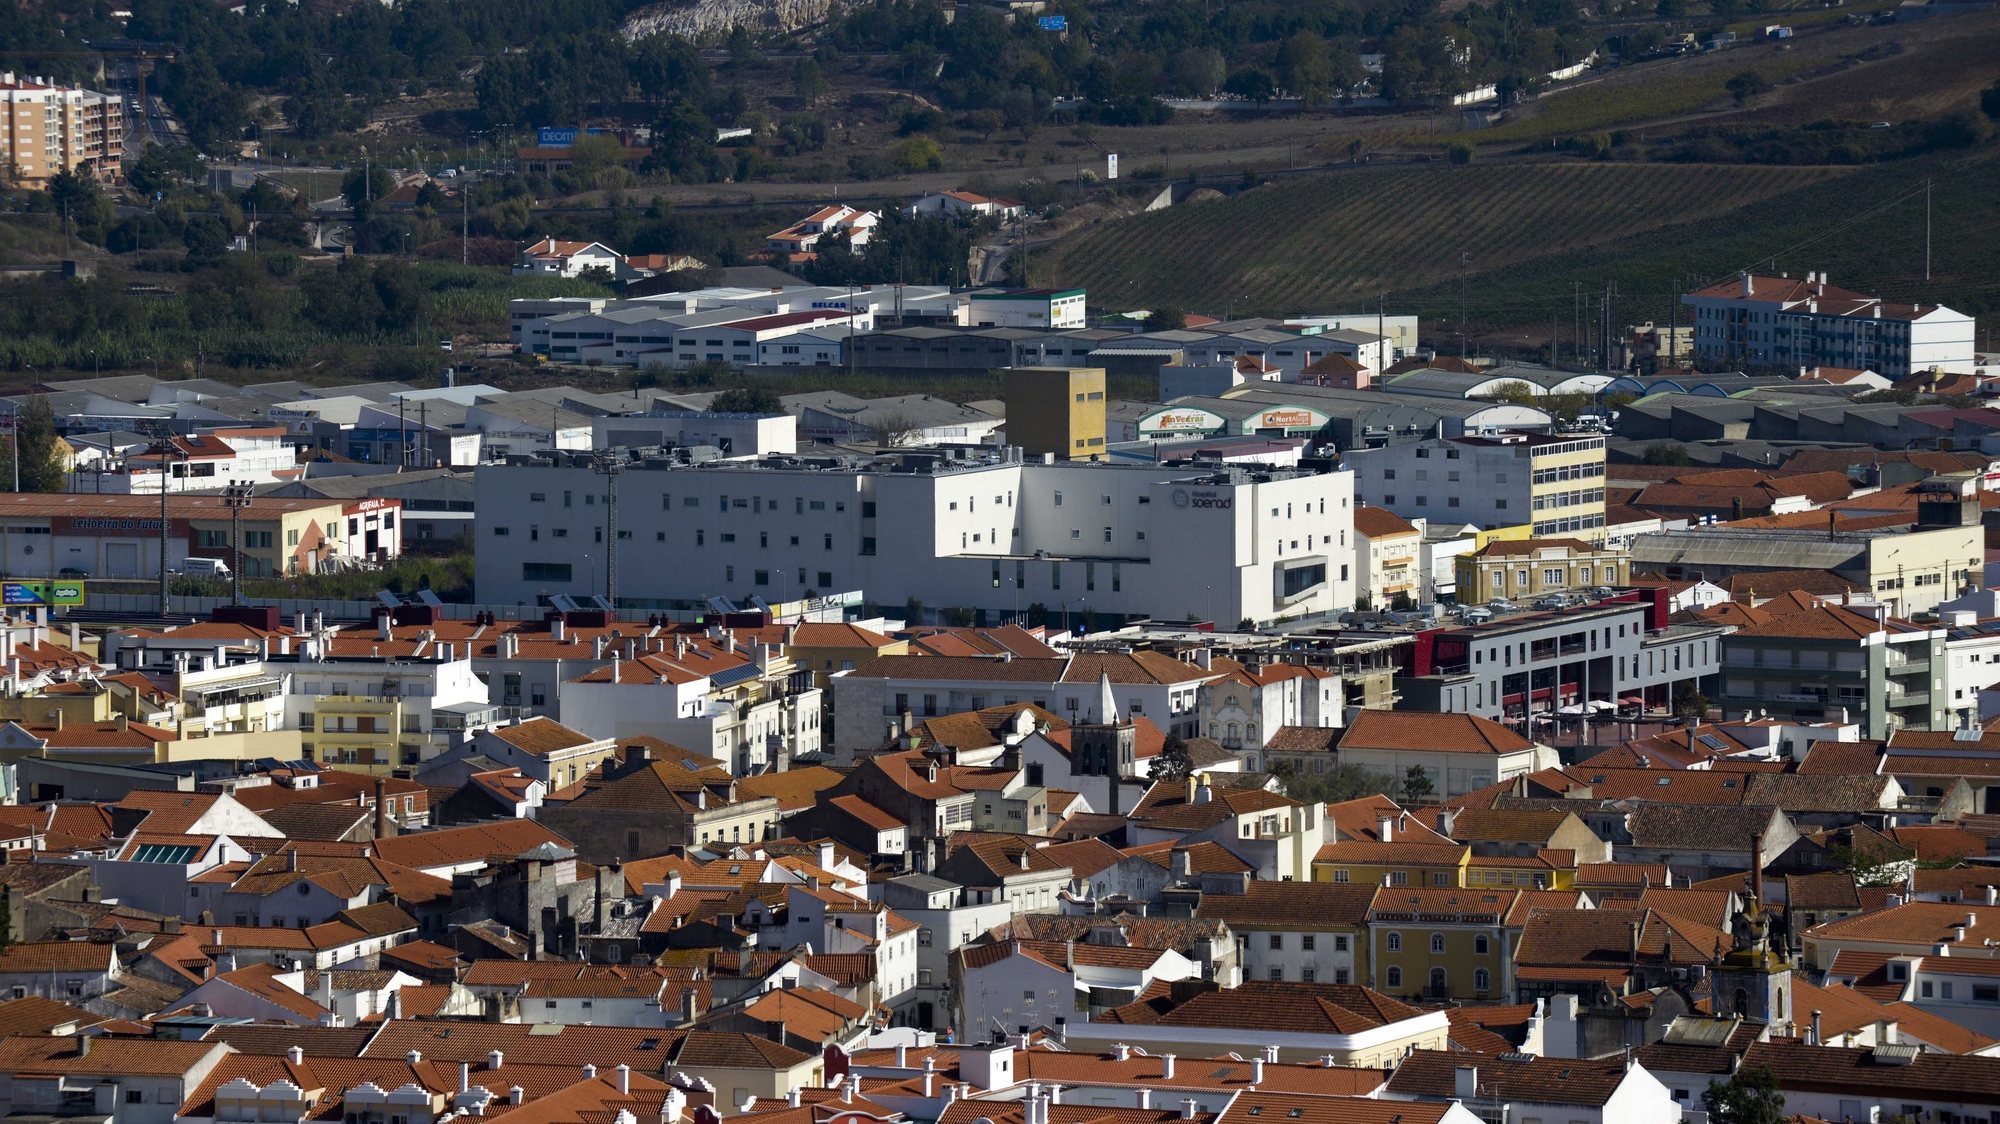 Edificio do hospital privado de Torres Vedras, 26 de outubro de 2017. CARLOS BARROSO/LUSA